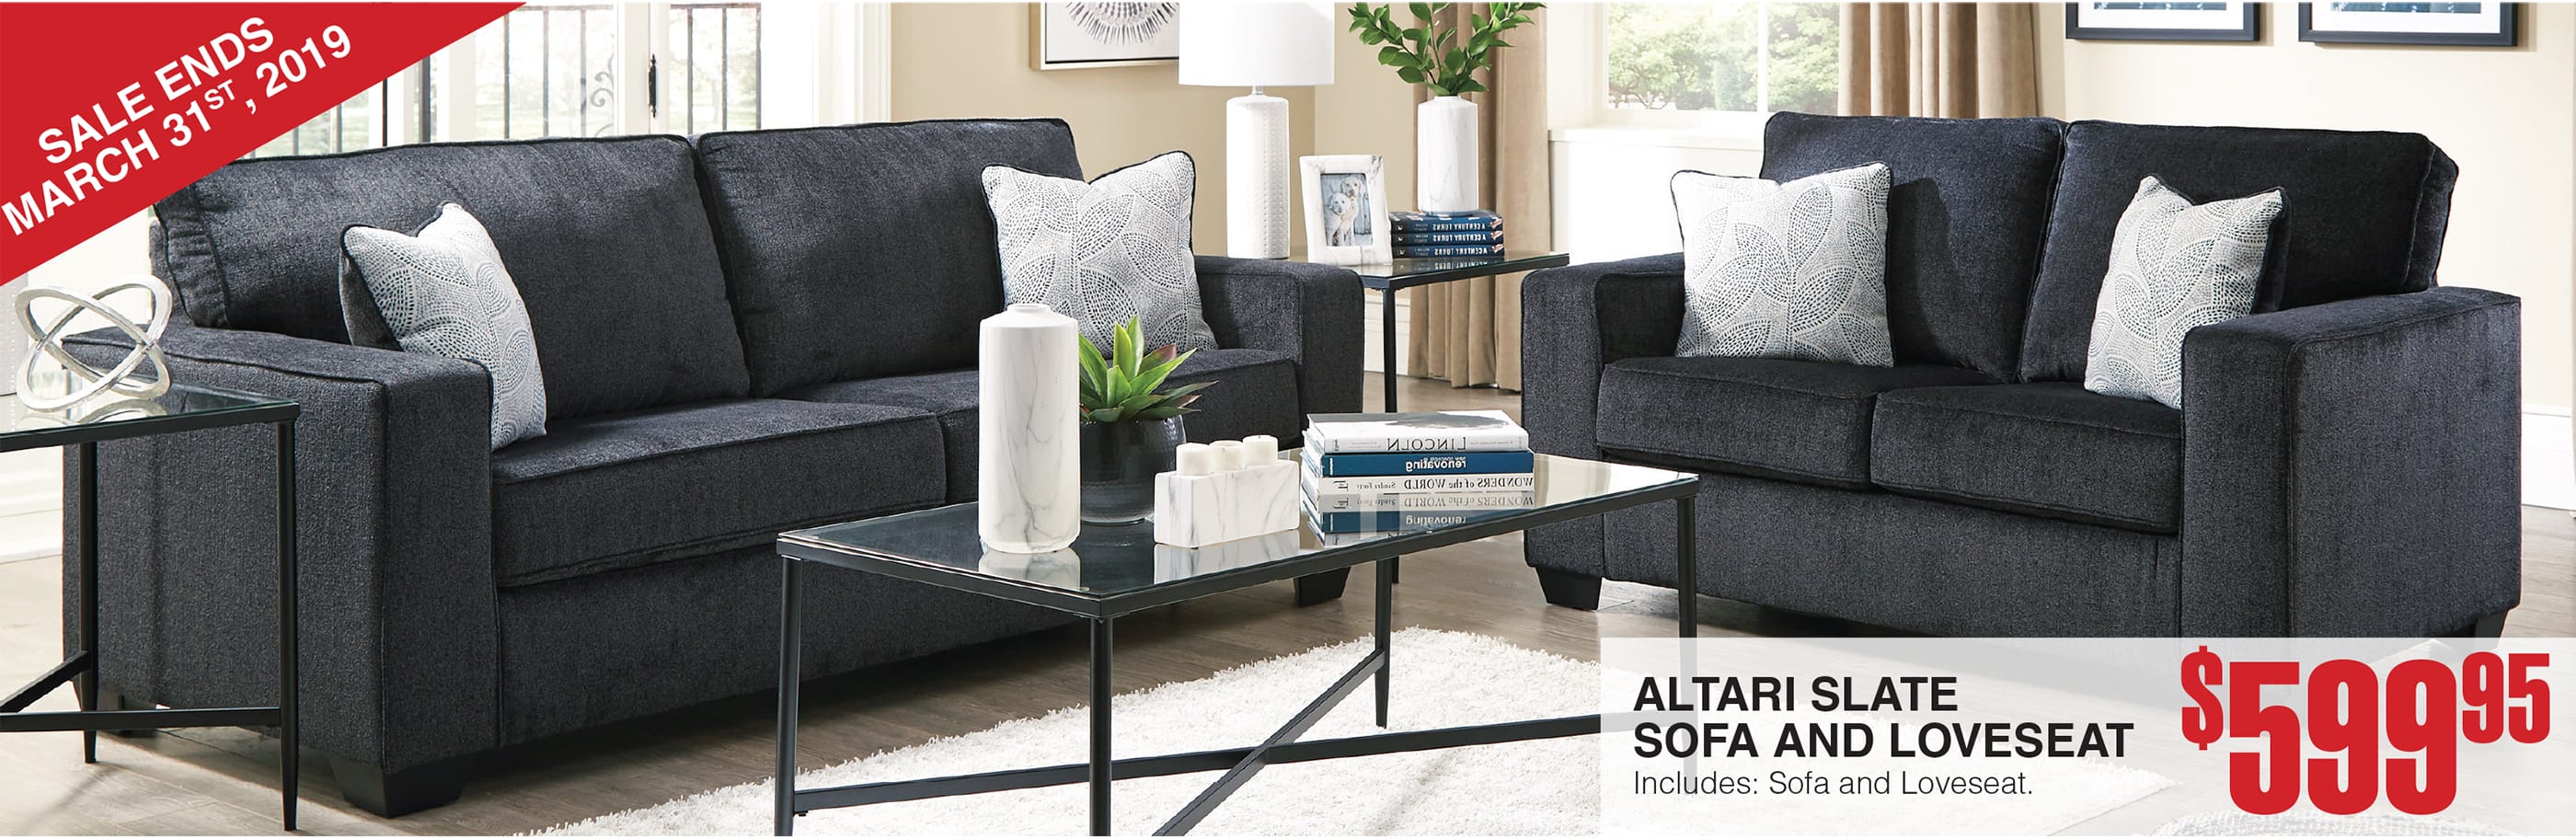 Living Room Tax Savings Adams Furniture Appliance